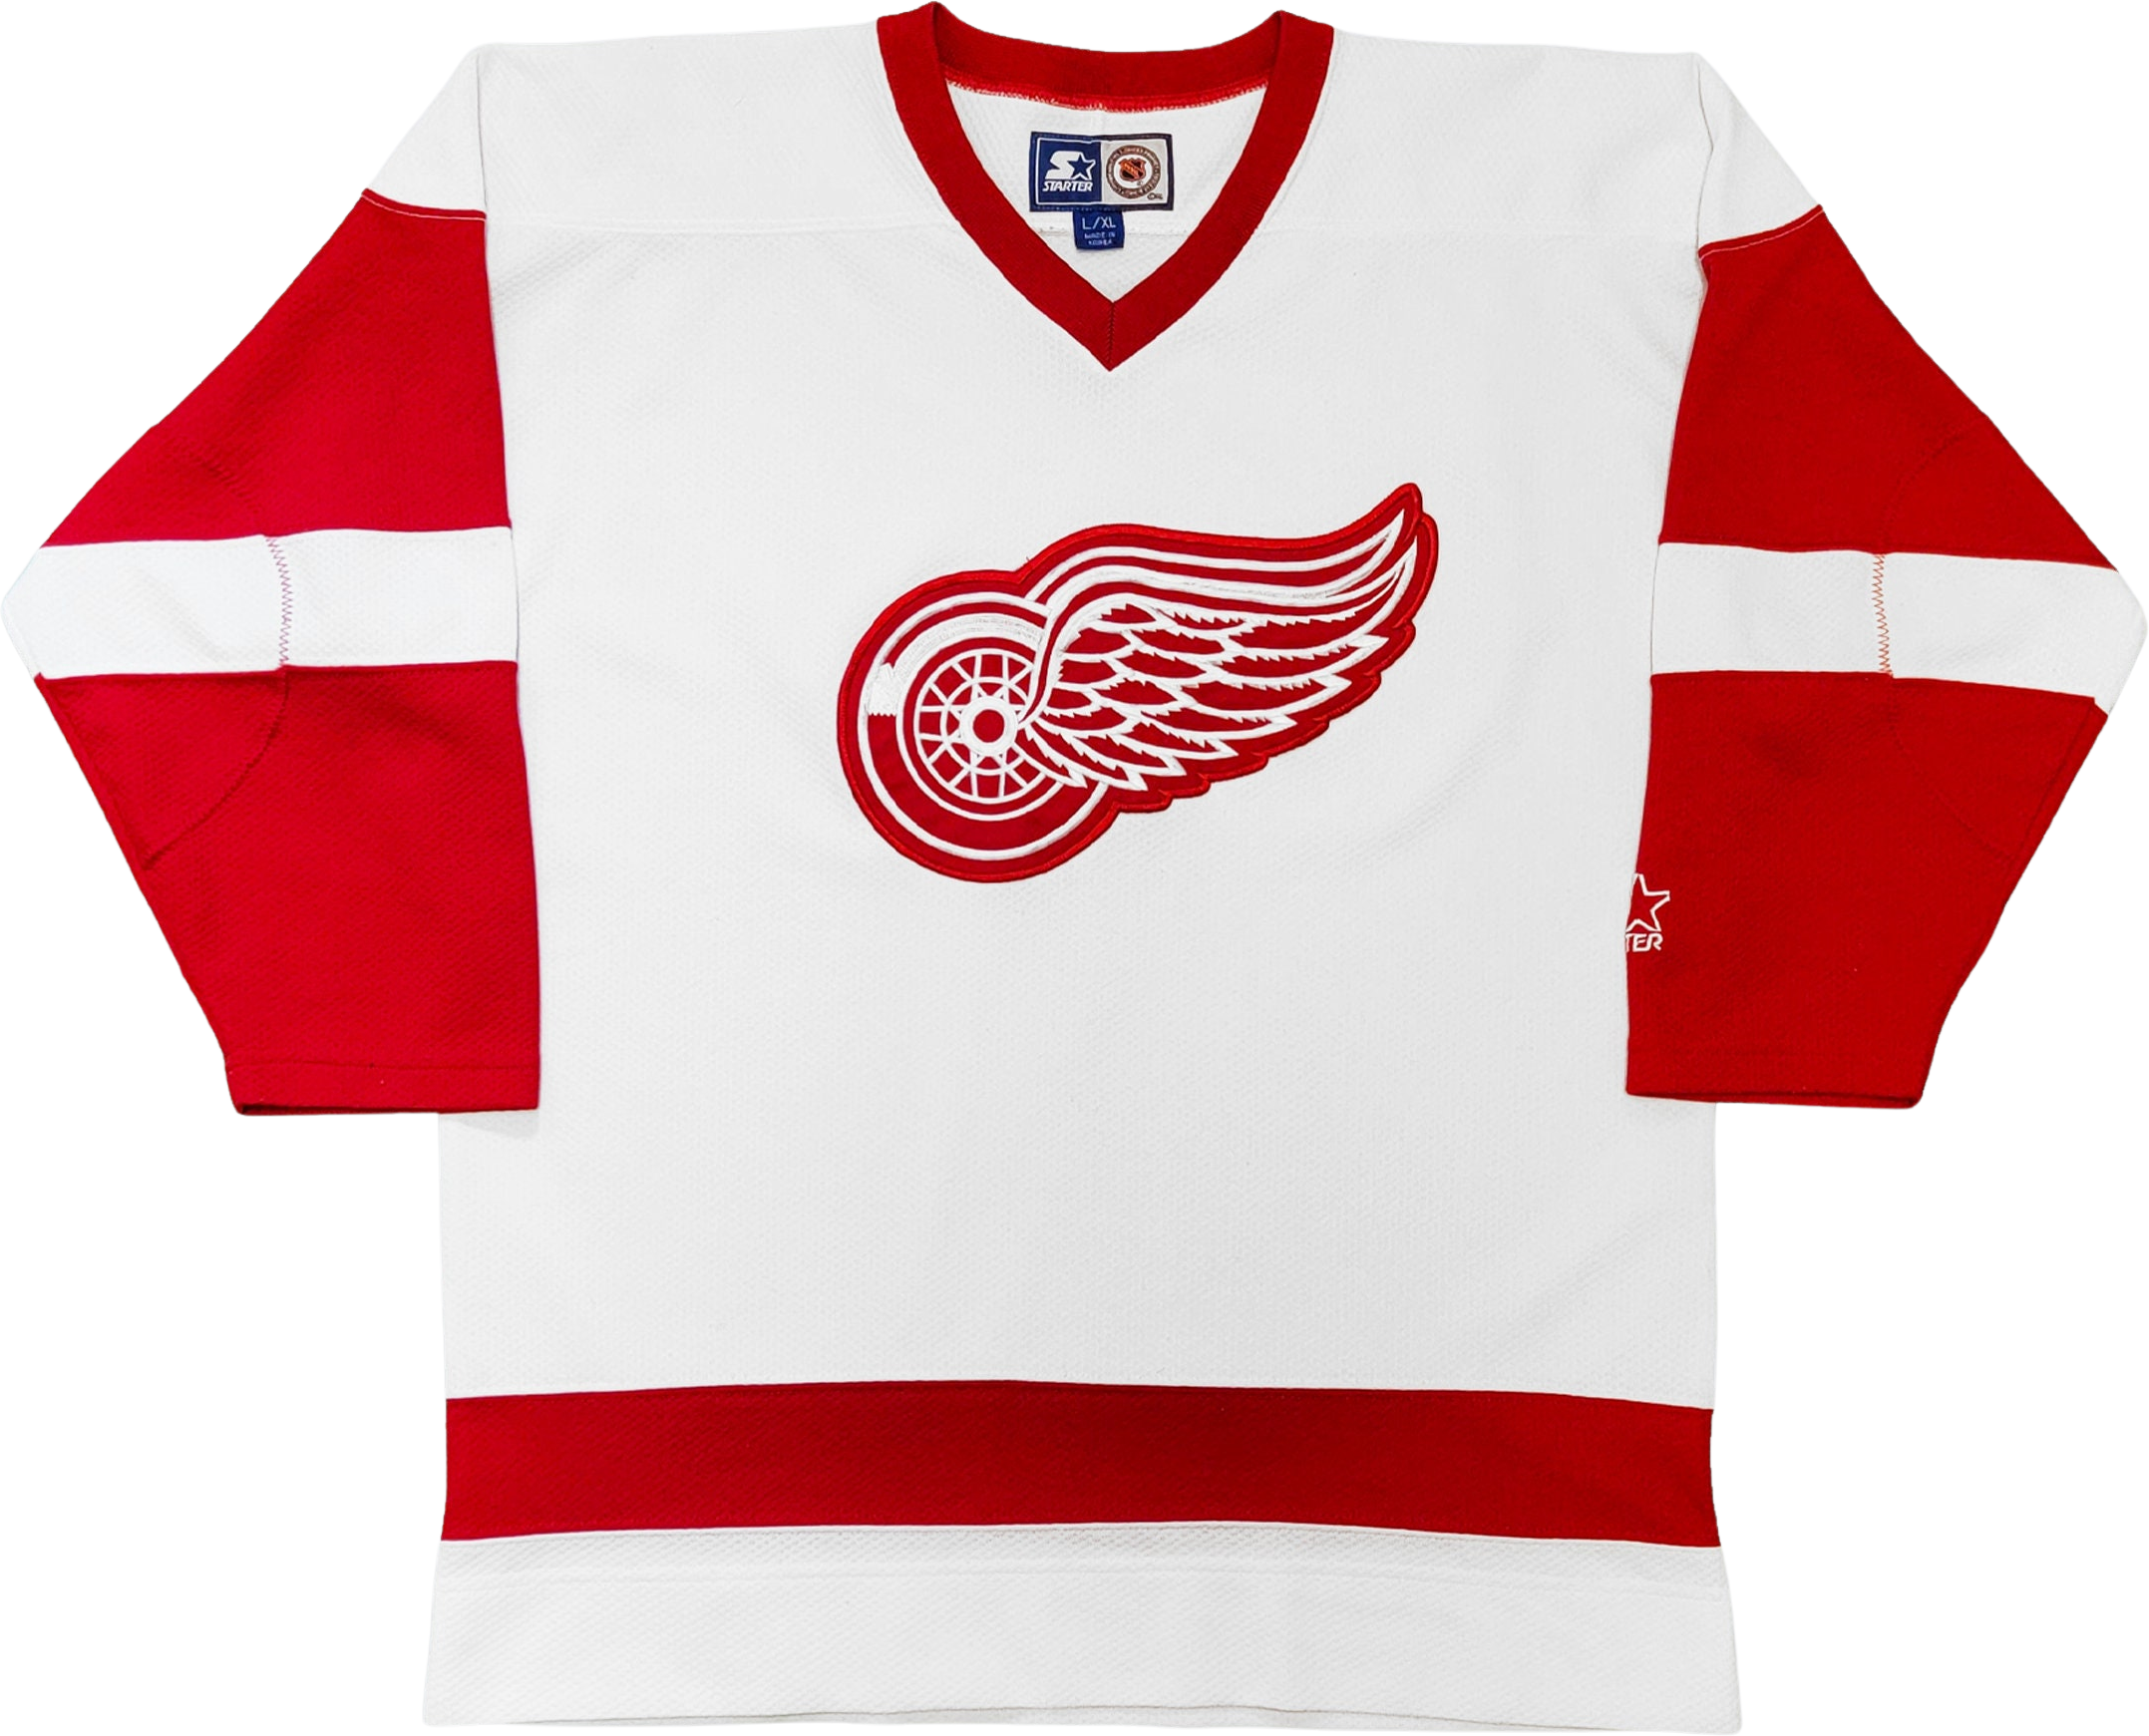 Vintage 90's Detroit Red Wings Hockey Crewneck Sweatshirt Made in USA